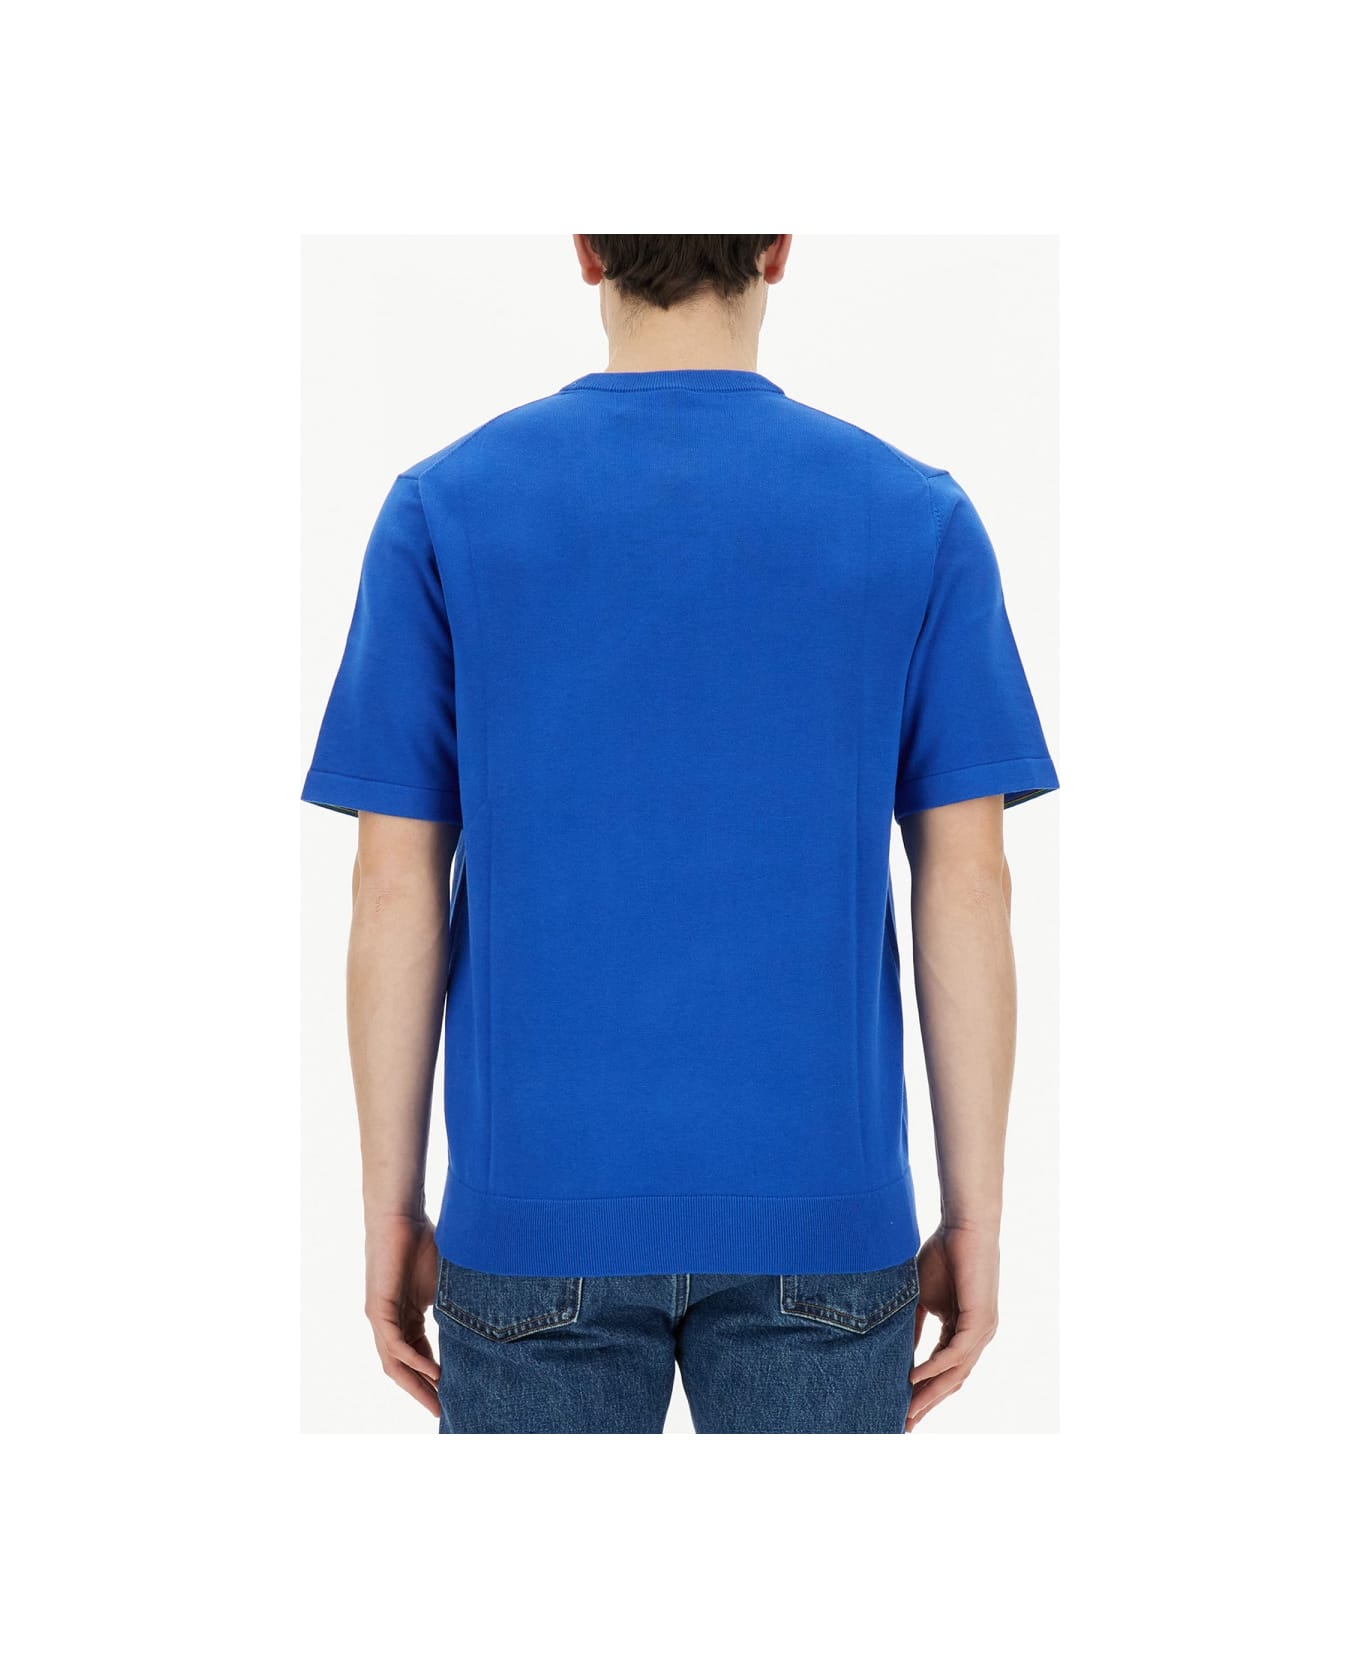 PS by Paul Smith "zebra" T-shirt - BLUE